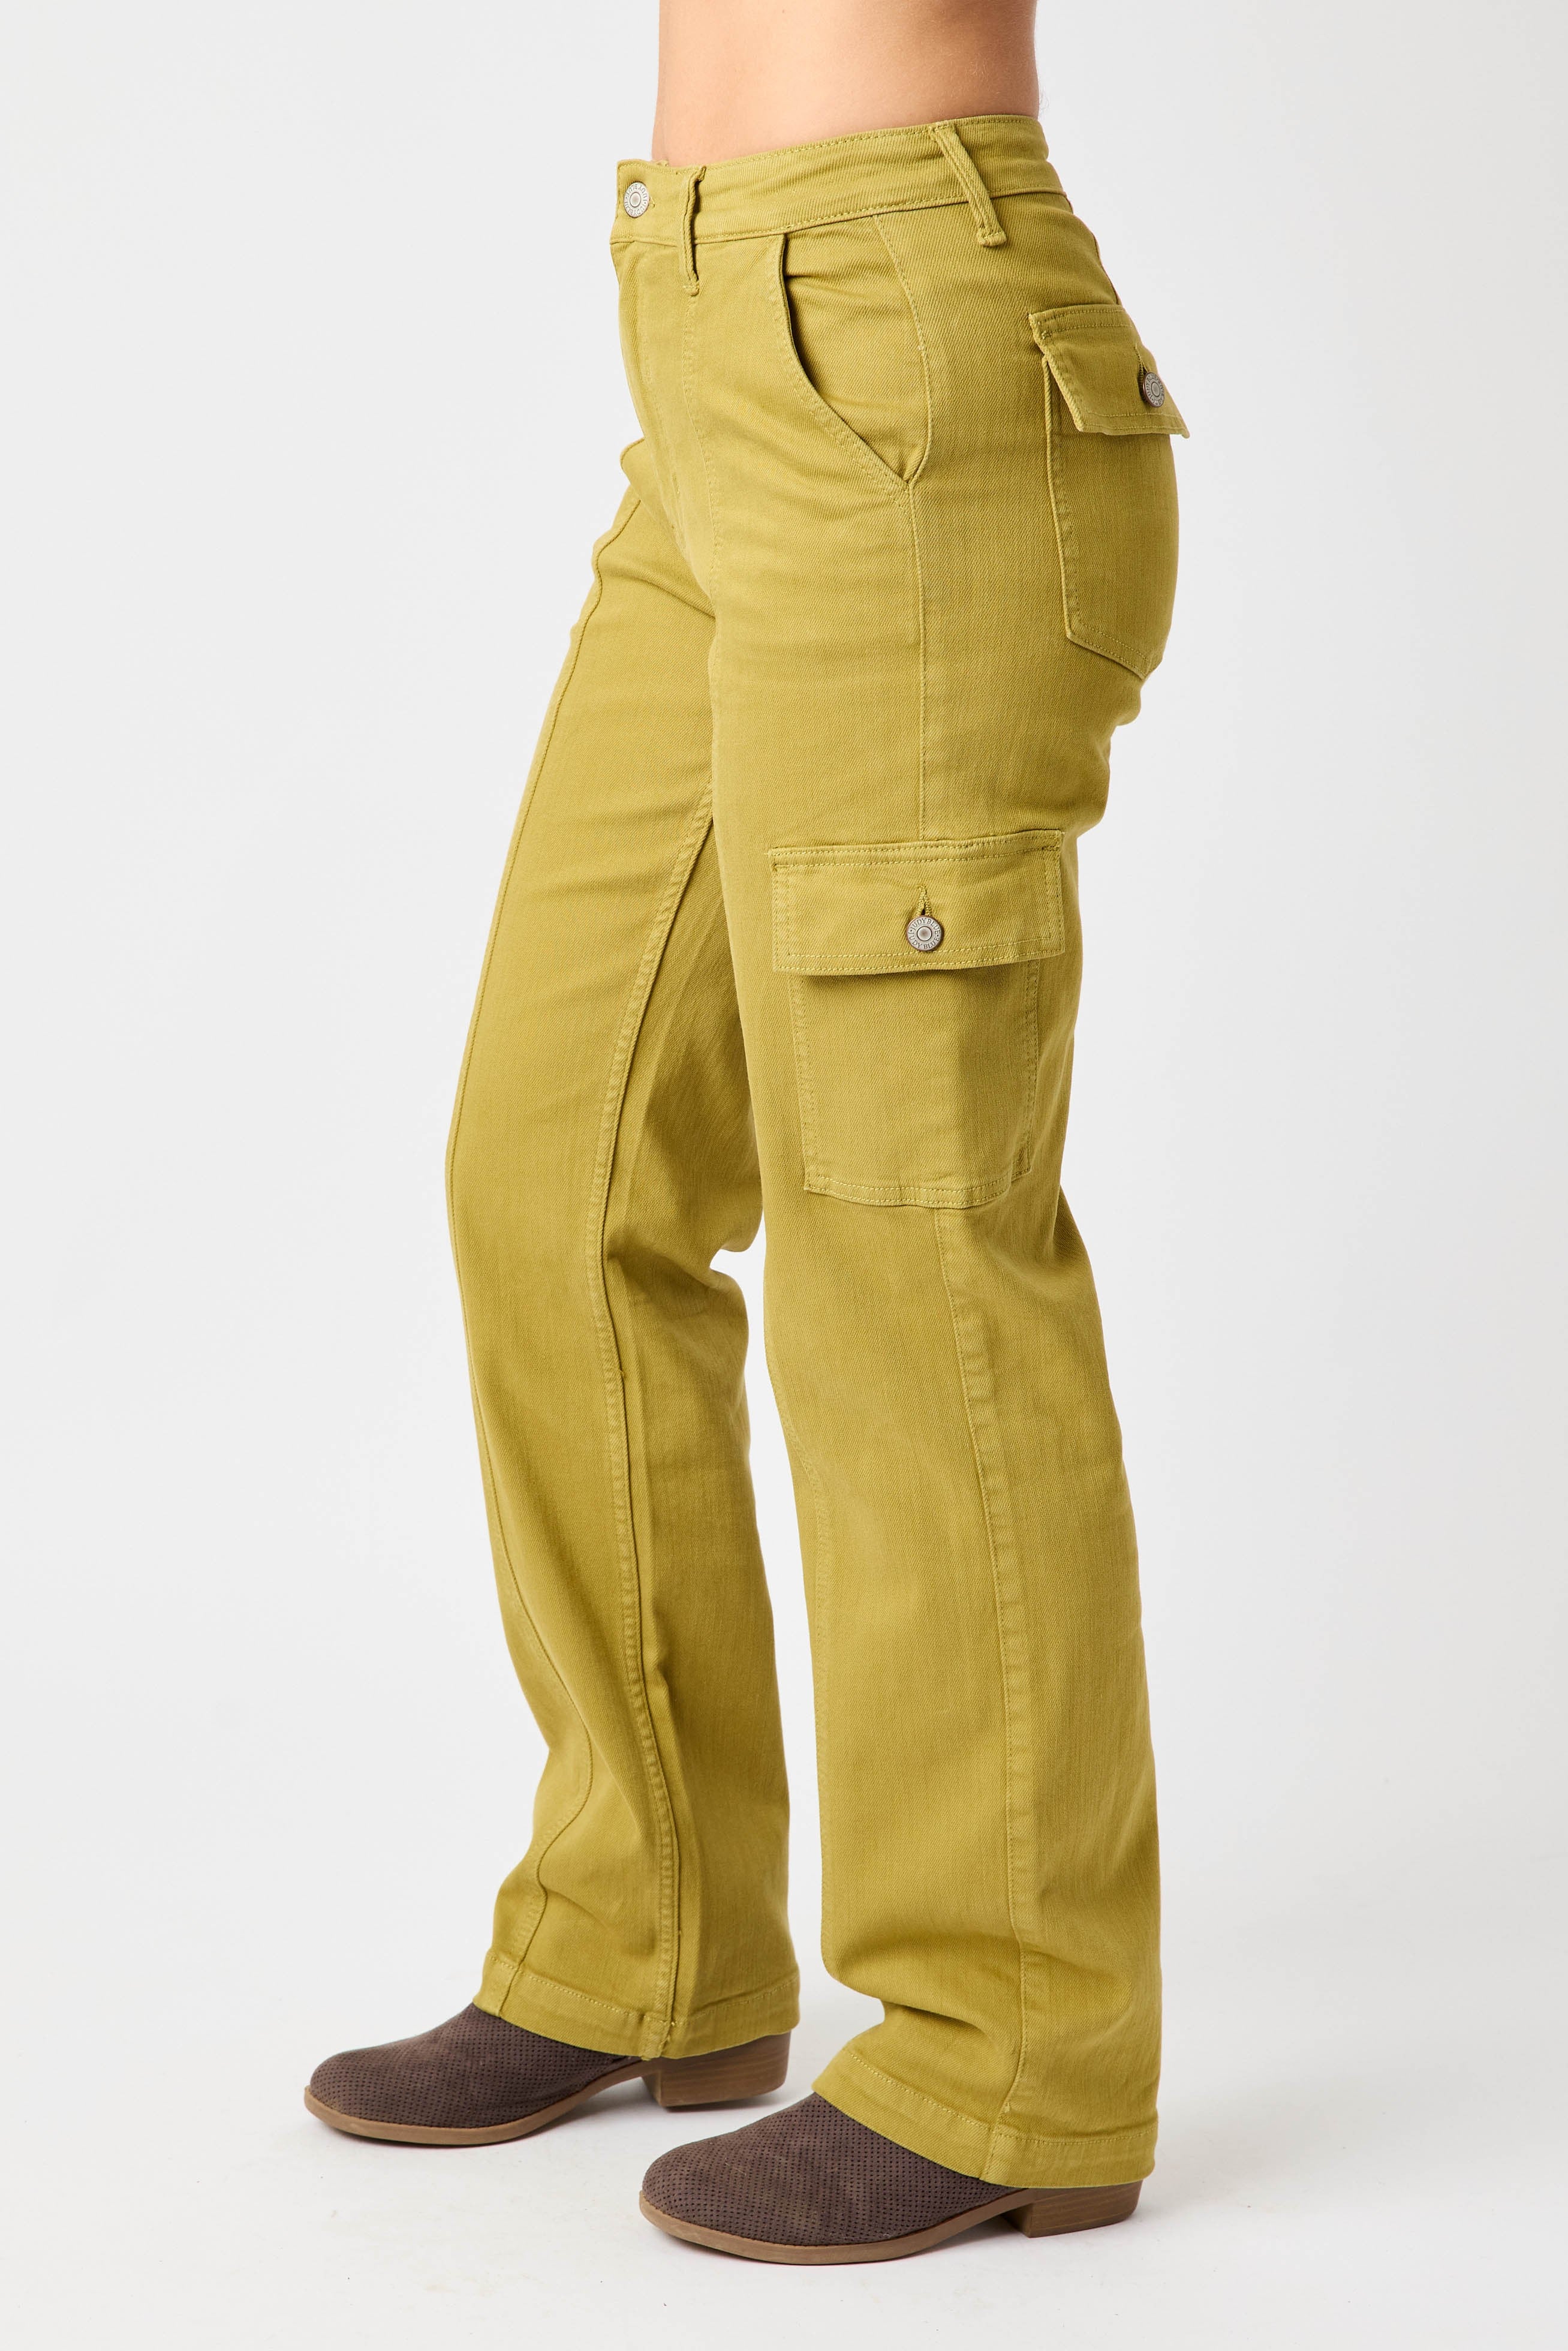 Judy Blue Matcha Doin' Cargo Jeans JB Boutique Simplified